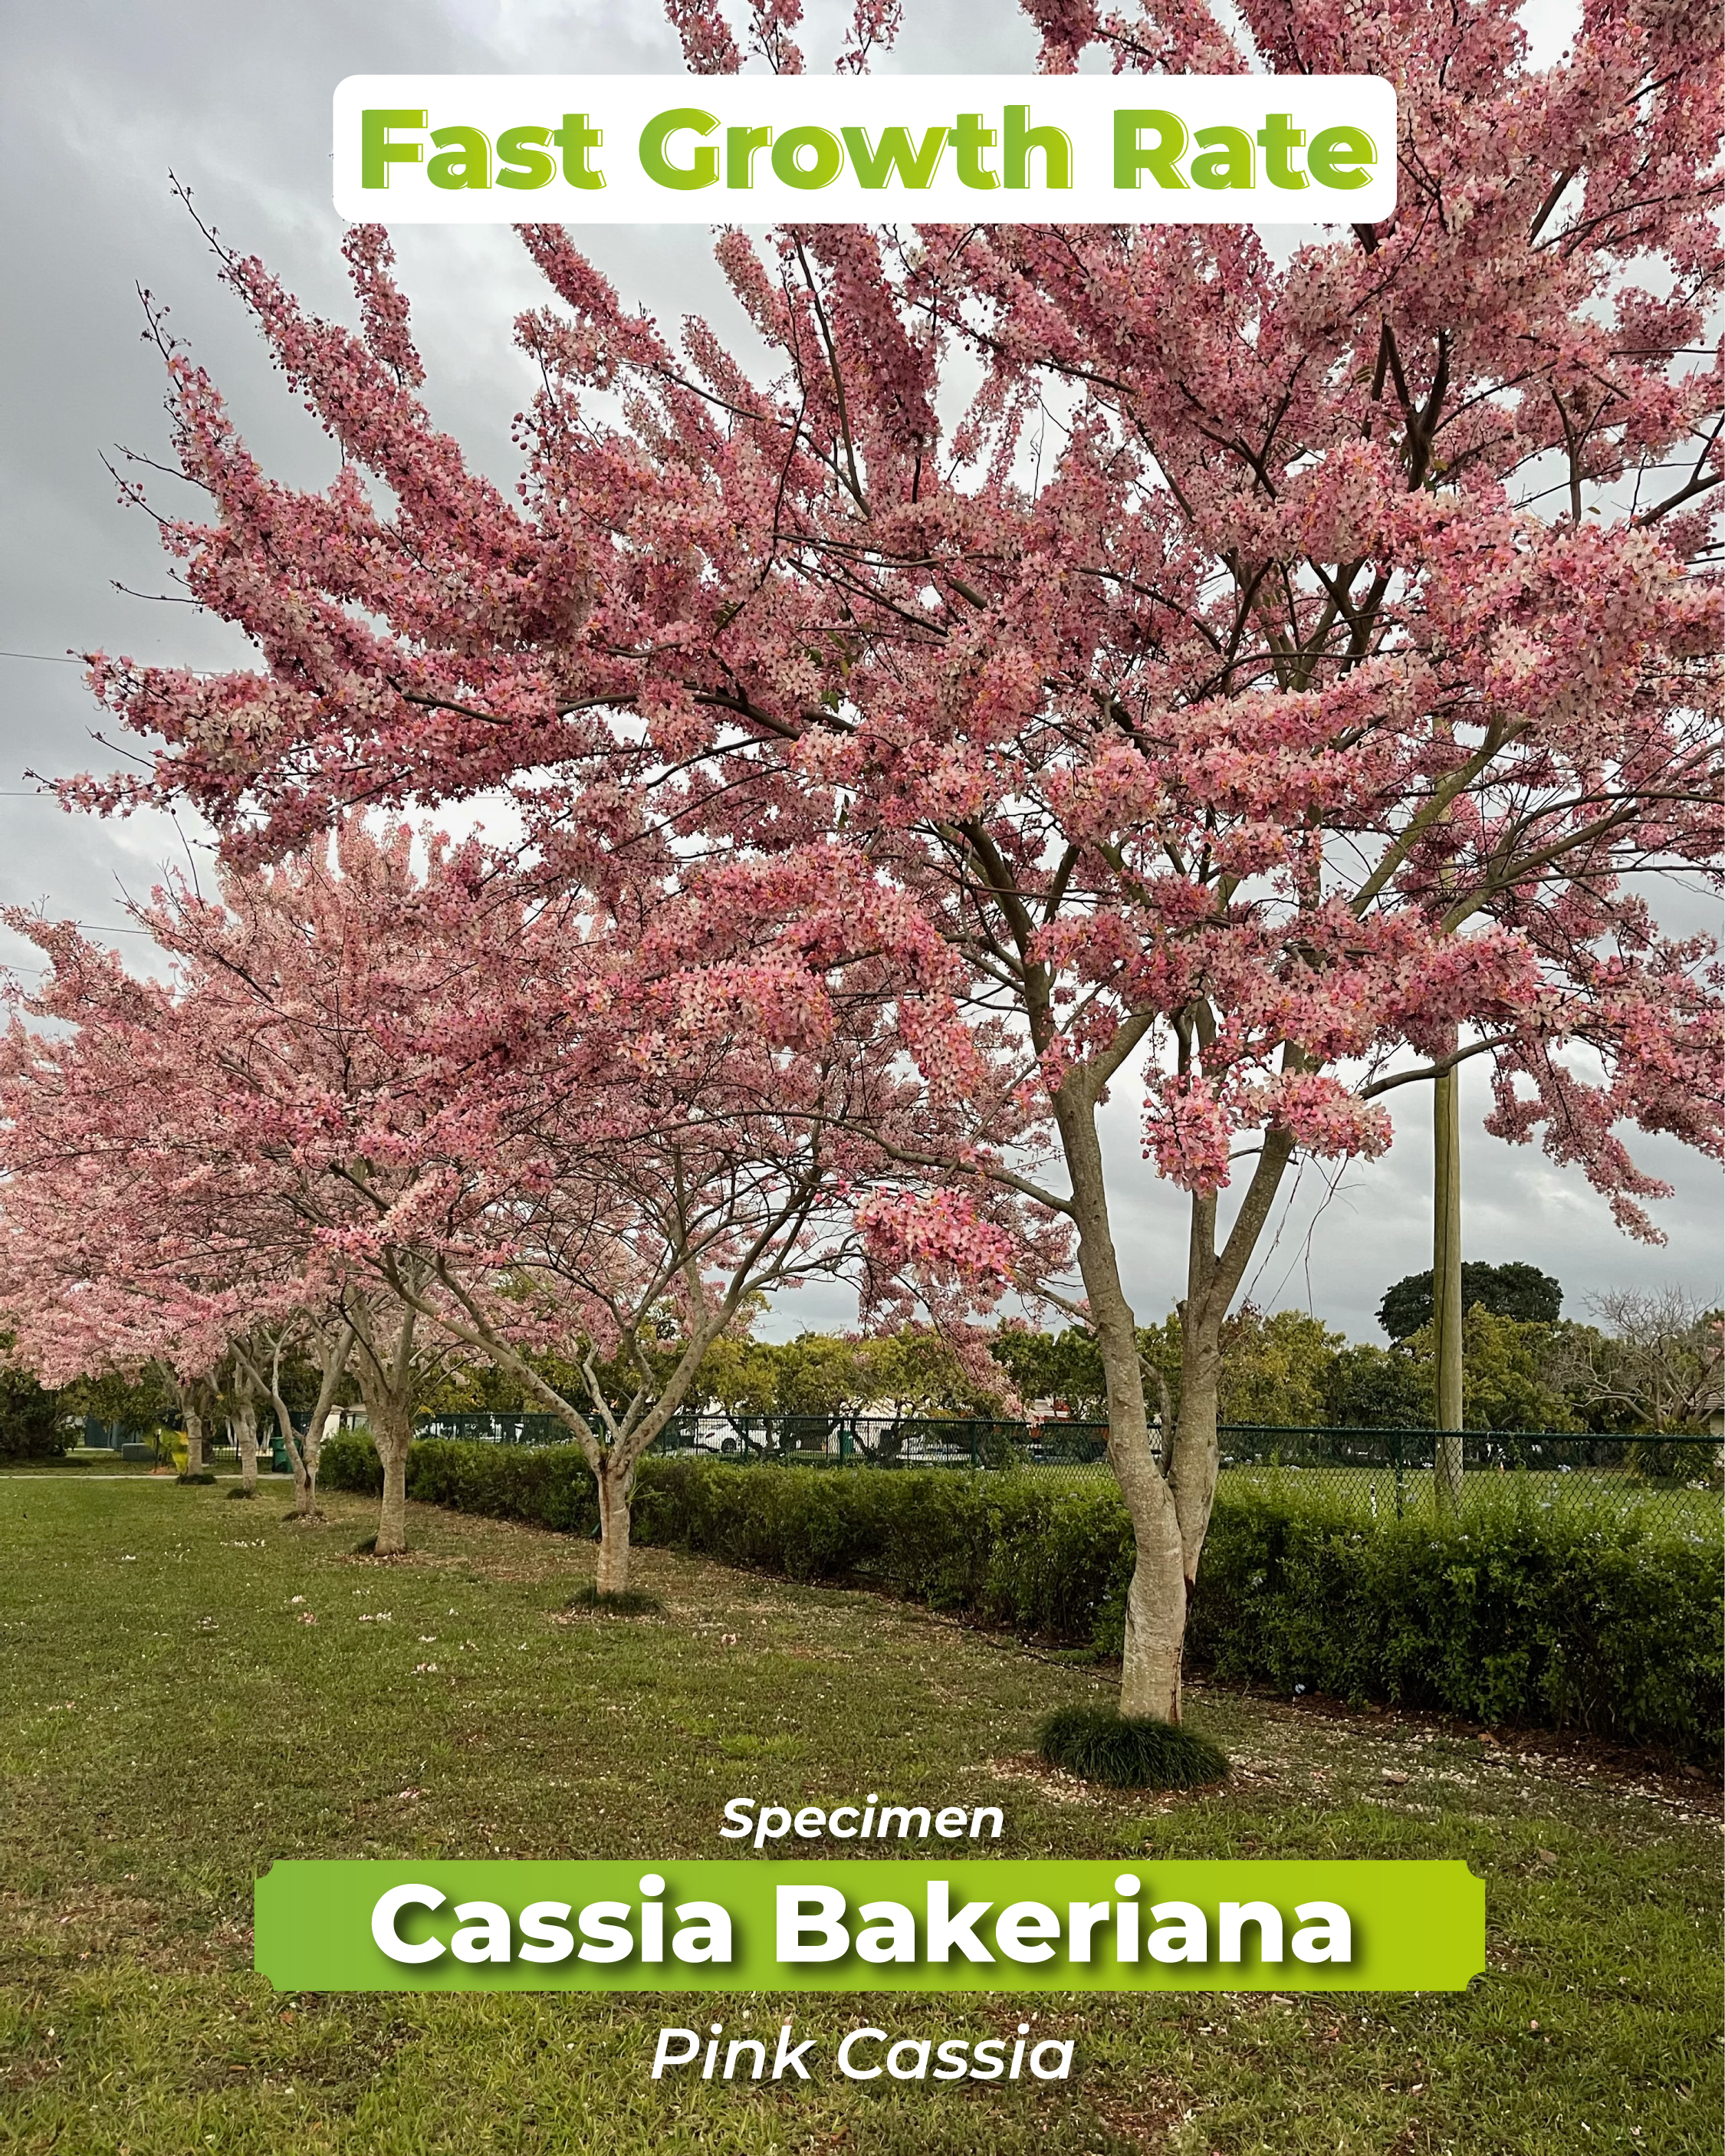 cassia-bakeriana-fastest-growth-rate-tree-pink-cassia-specimen